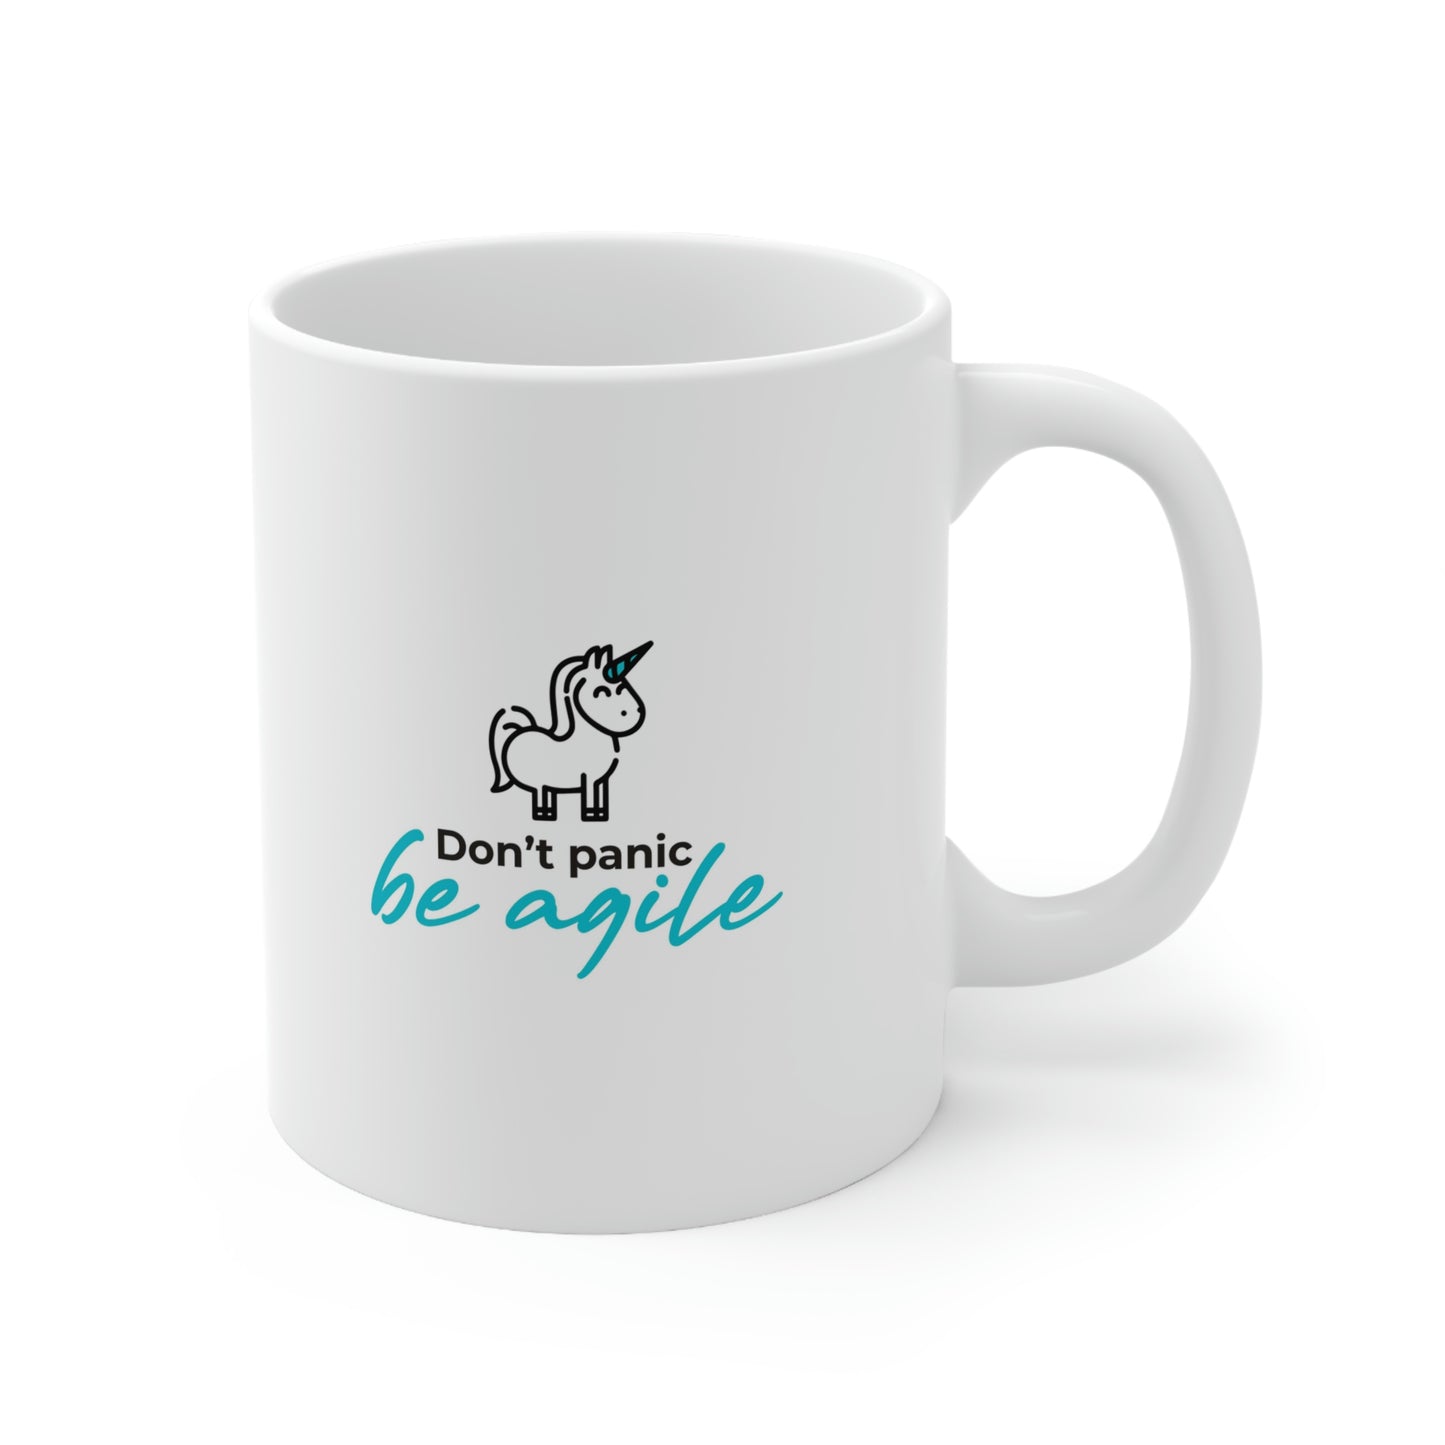 Don't Panic Be agile - Ceramic Mug 11oz